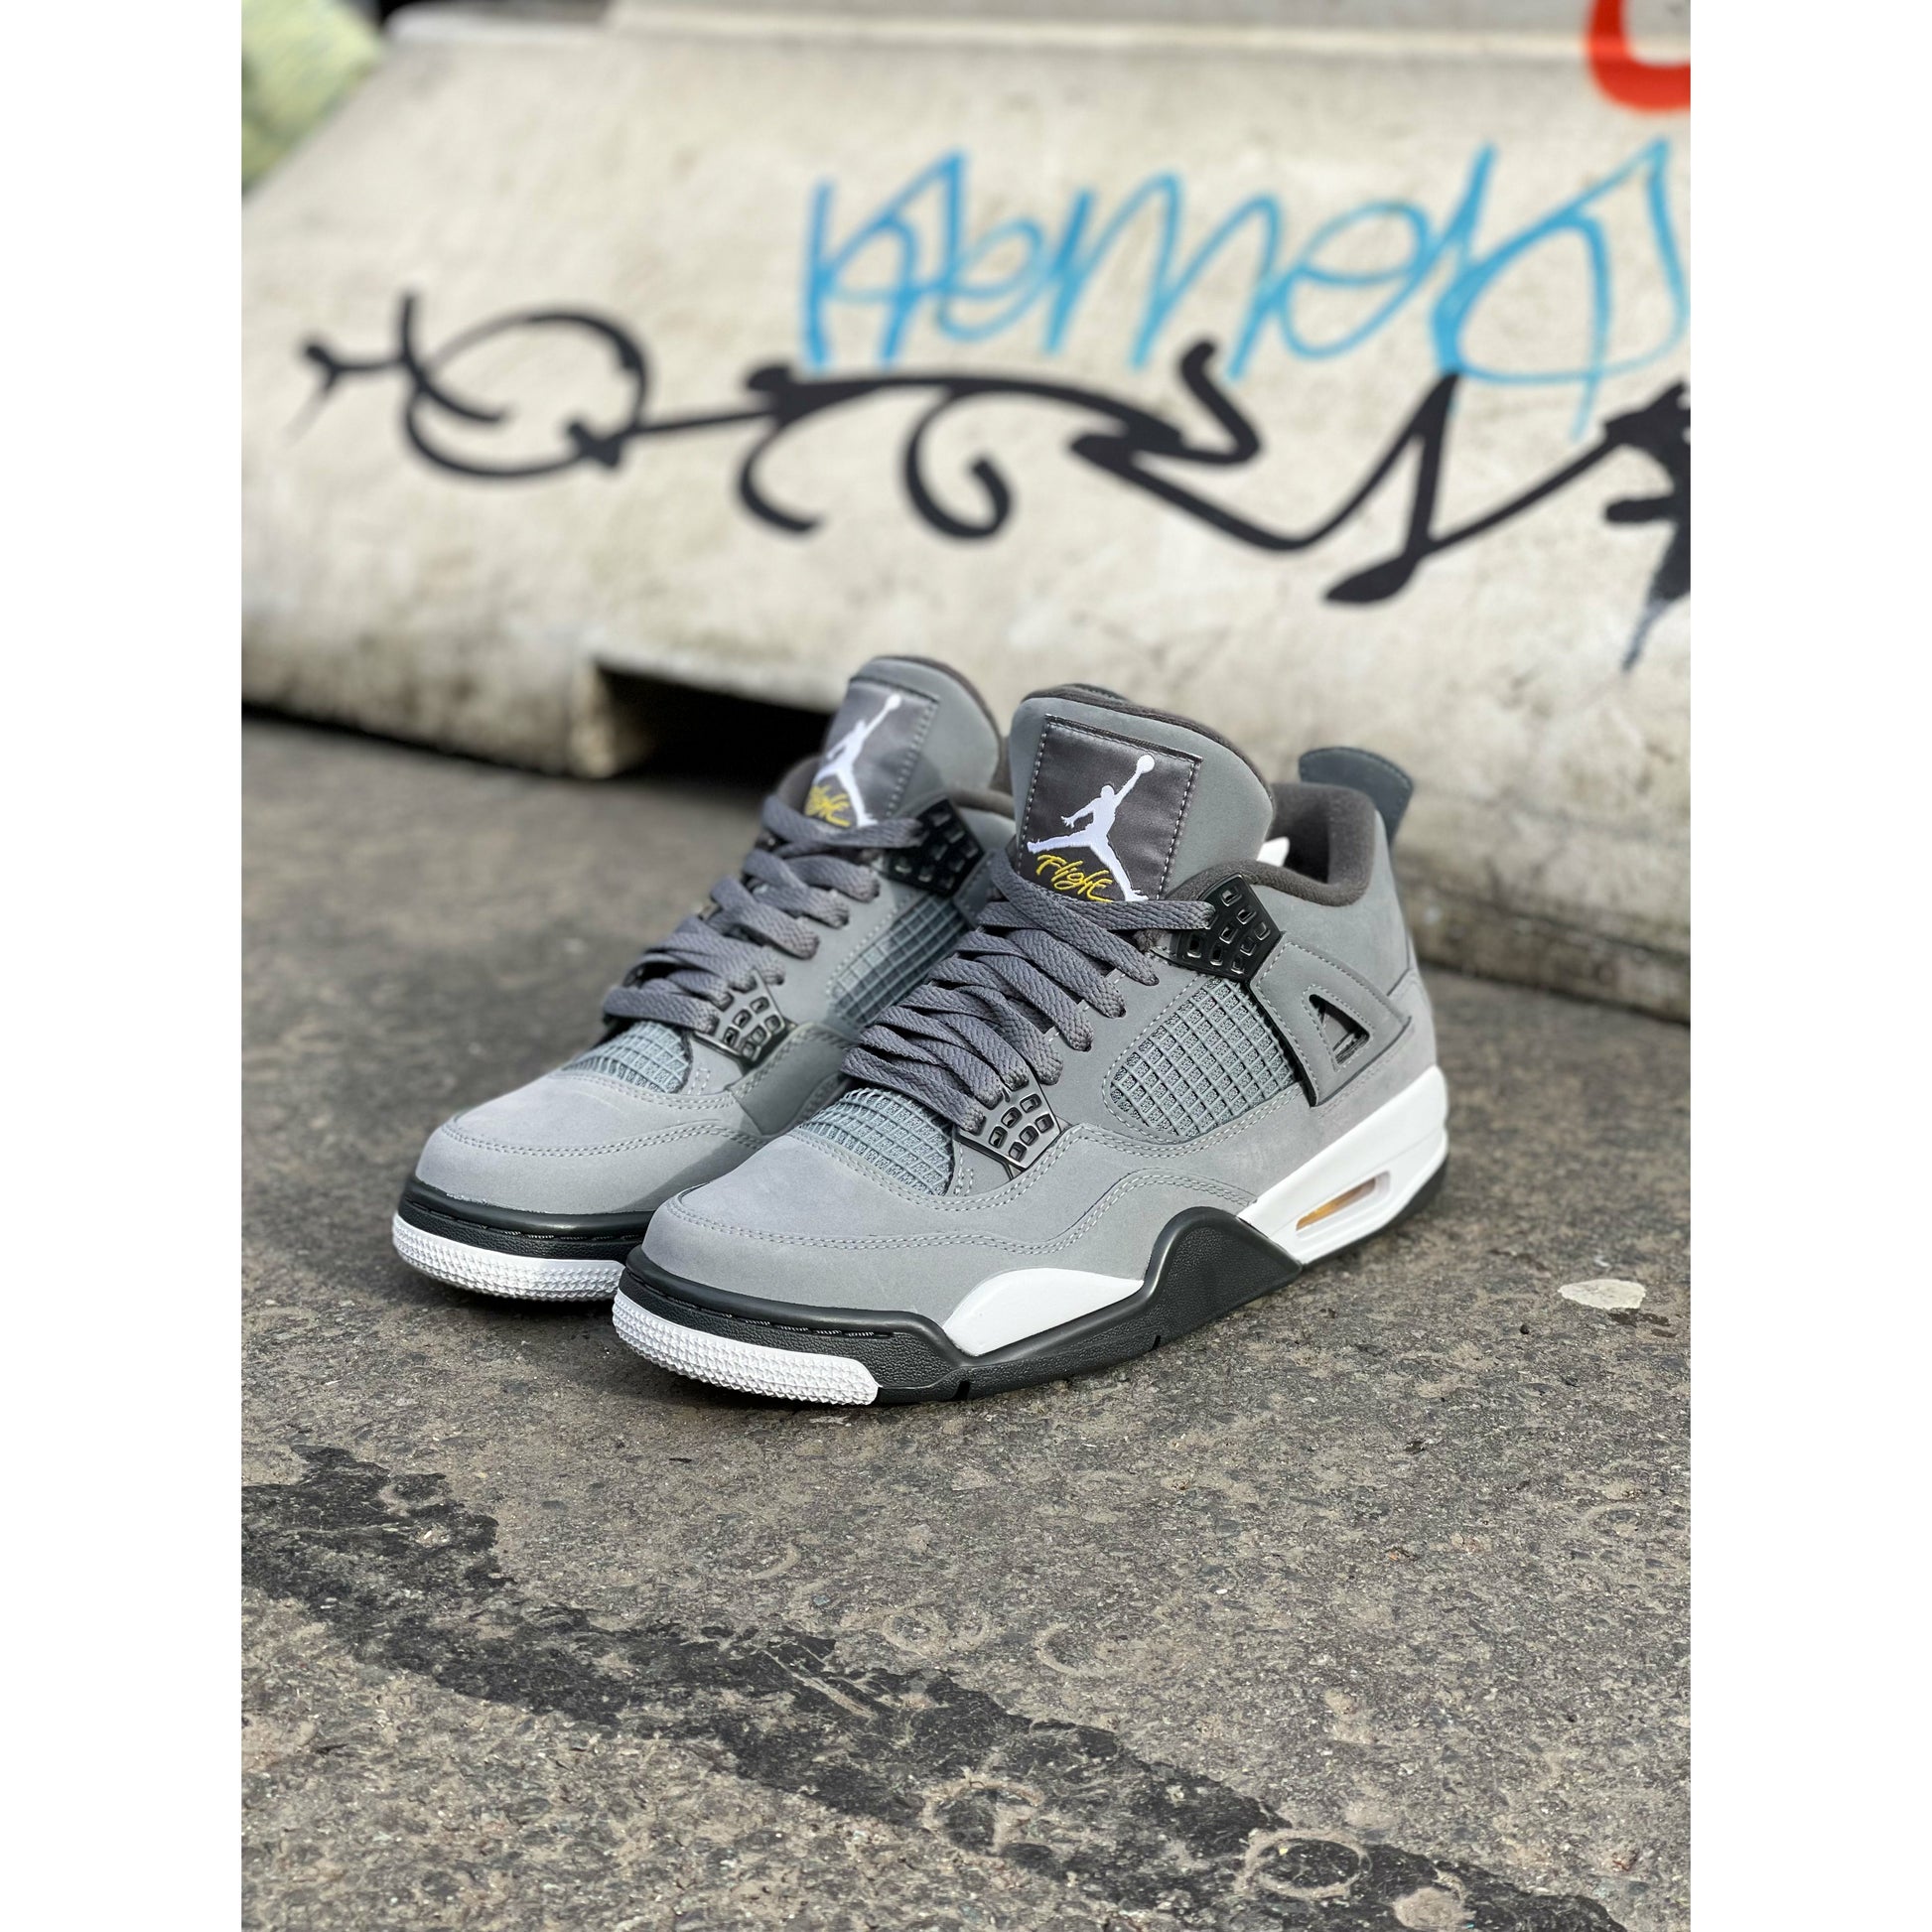 Jordan 4 Retro Cool Grey (2019) by Jordan's from £450.99